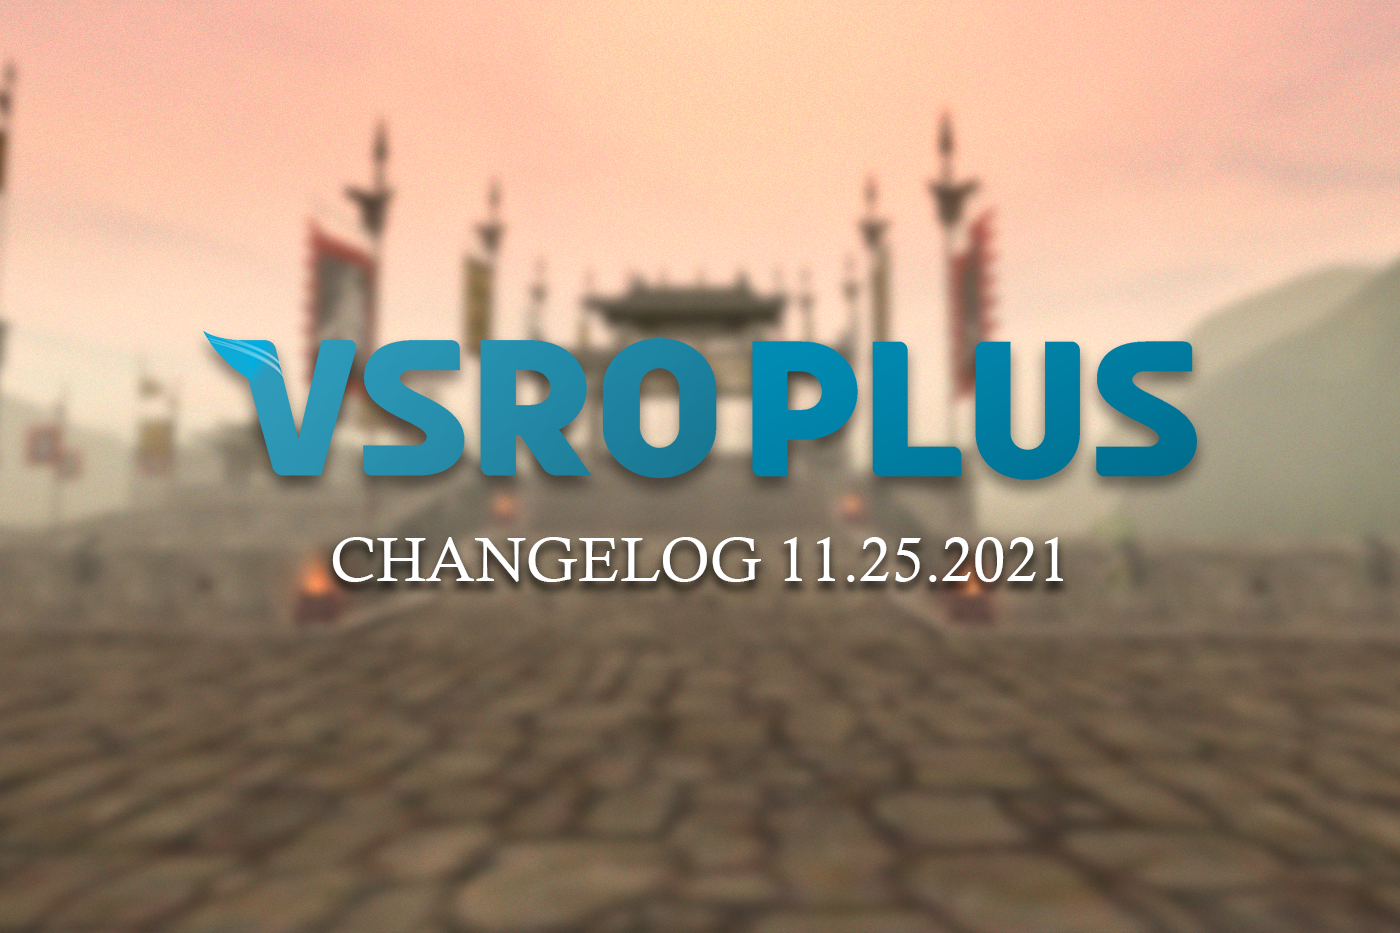 Play Time - Changelog v3.4.6